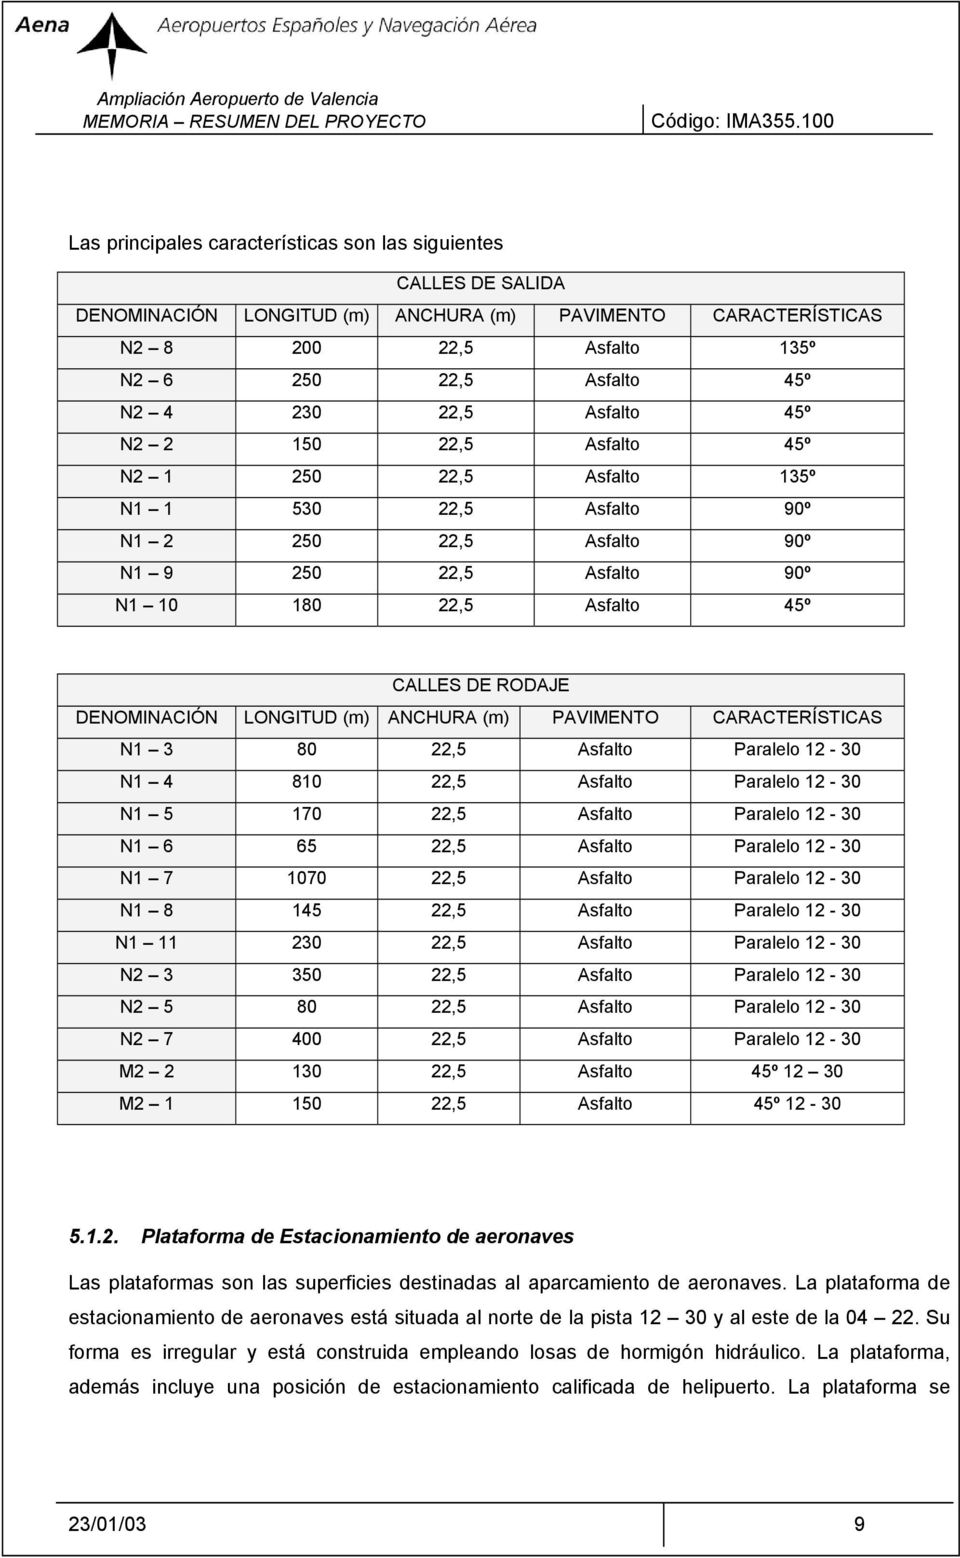 LONGITUD (m) ANCHURA (m) PAVIMENTO CARACTERÍSTICAS N1 3 80 22,5 Asfalto Paralelo 12-30 N1 4 810 22,5 Asfalto Paralelo 12-30 N1 5 170 22,5 Asfalto Paralelo 12-30 N1 6 65 22,5 Asfalto Paralelo 12-30 N1